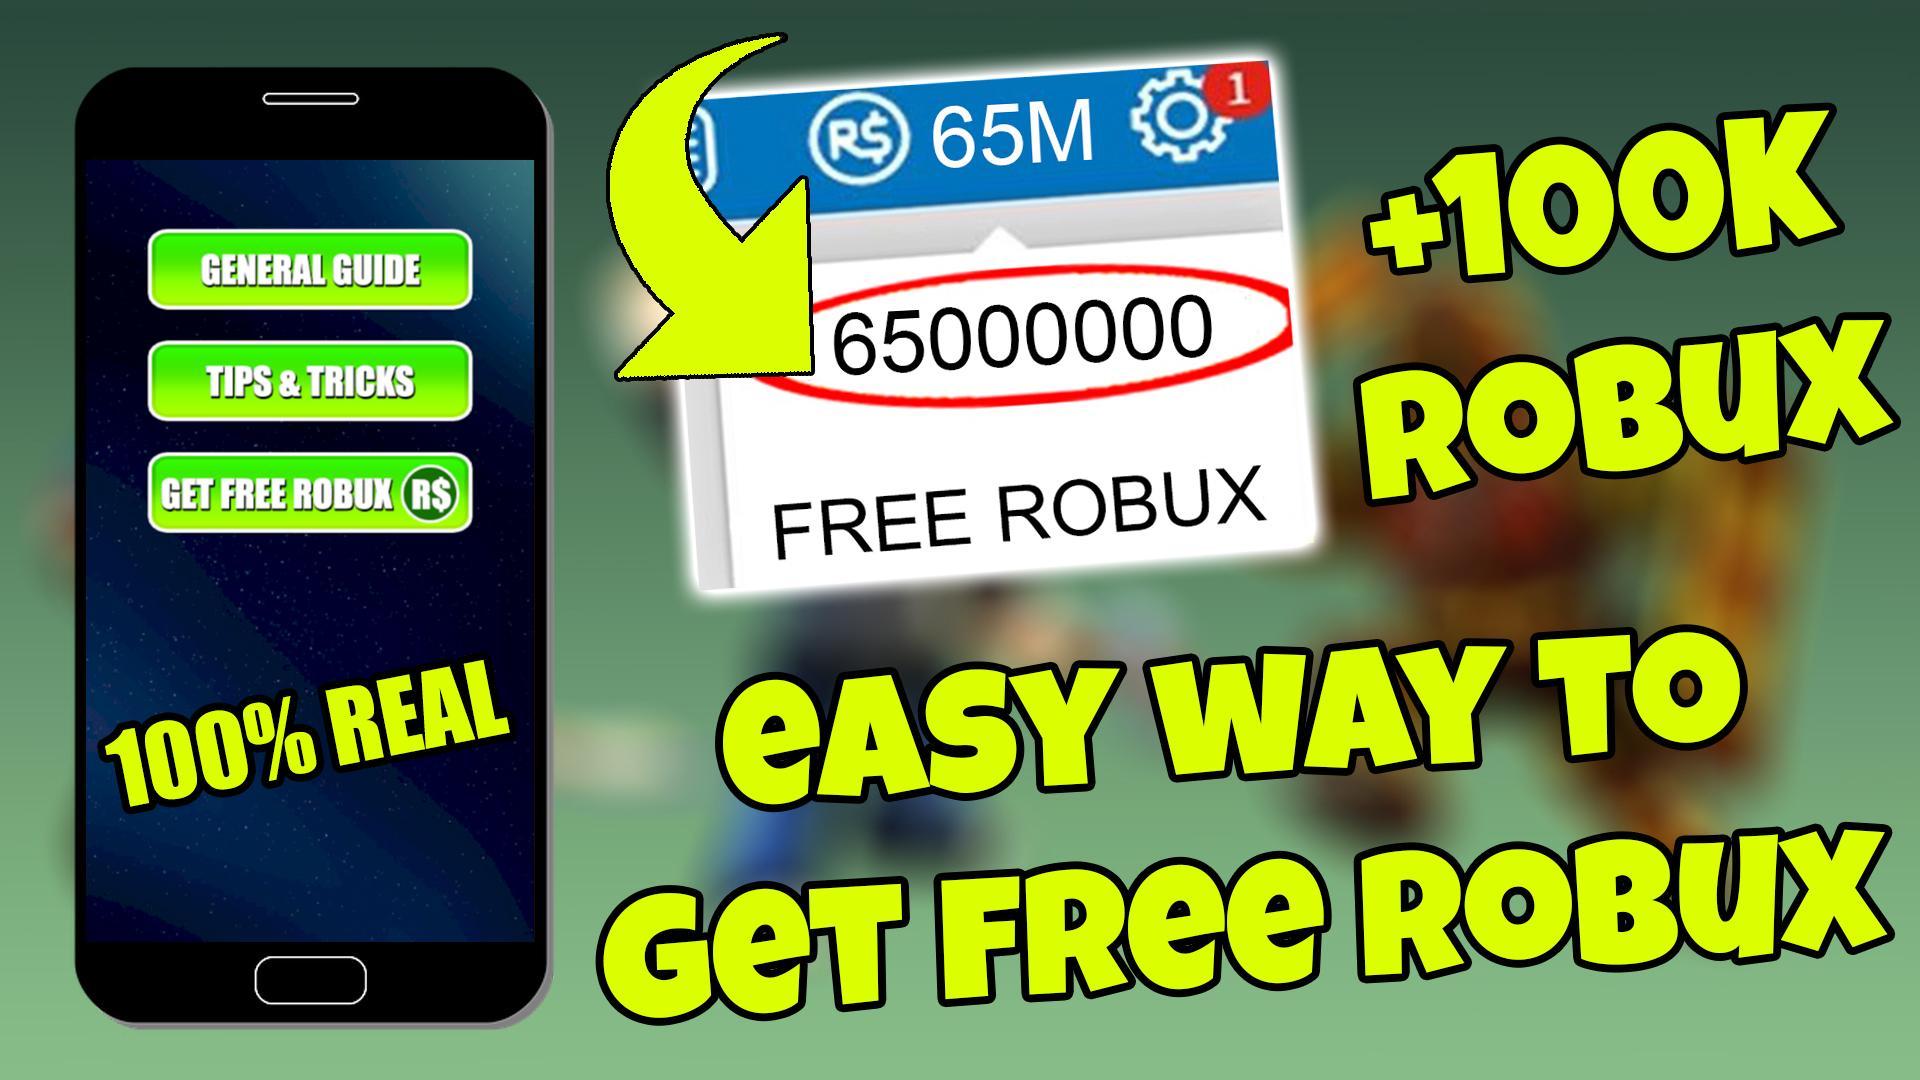 Get 100k Robux